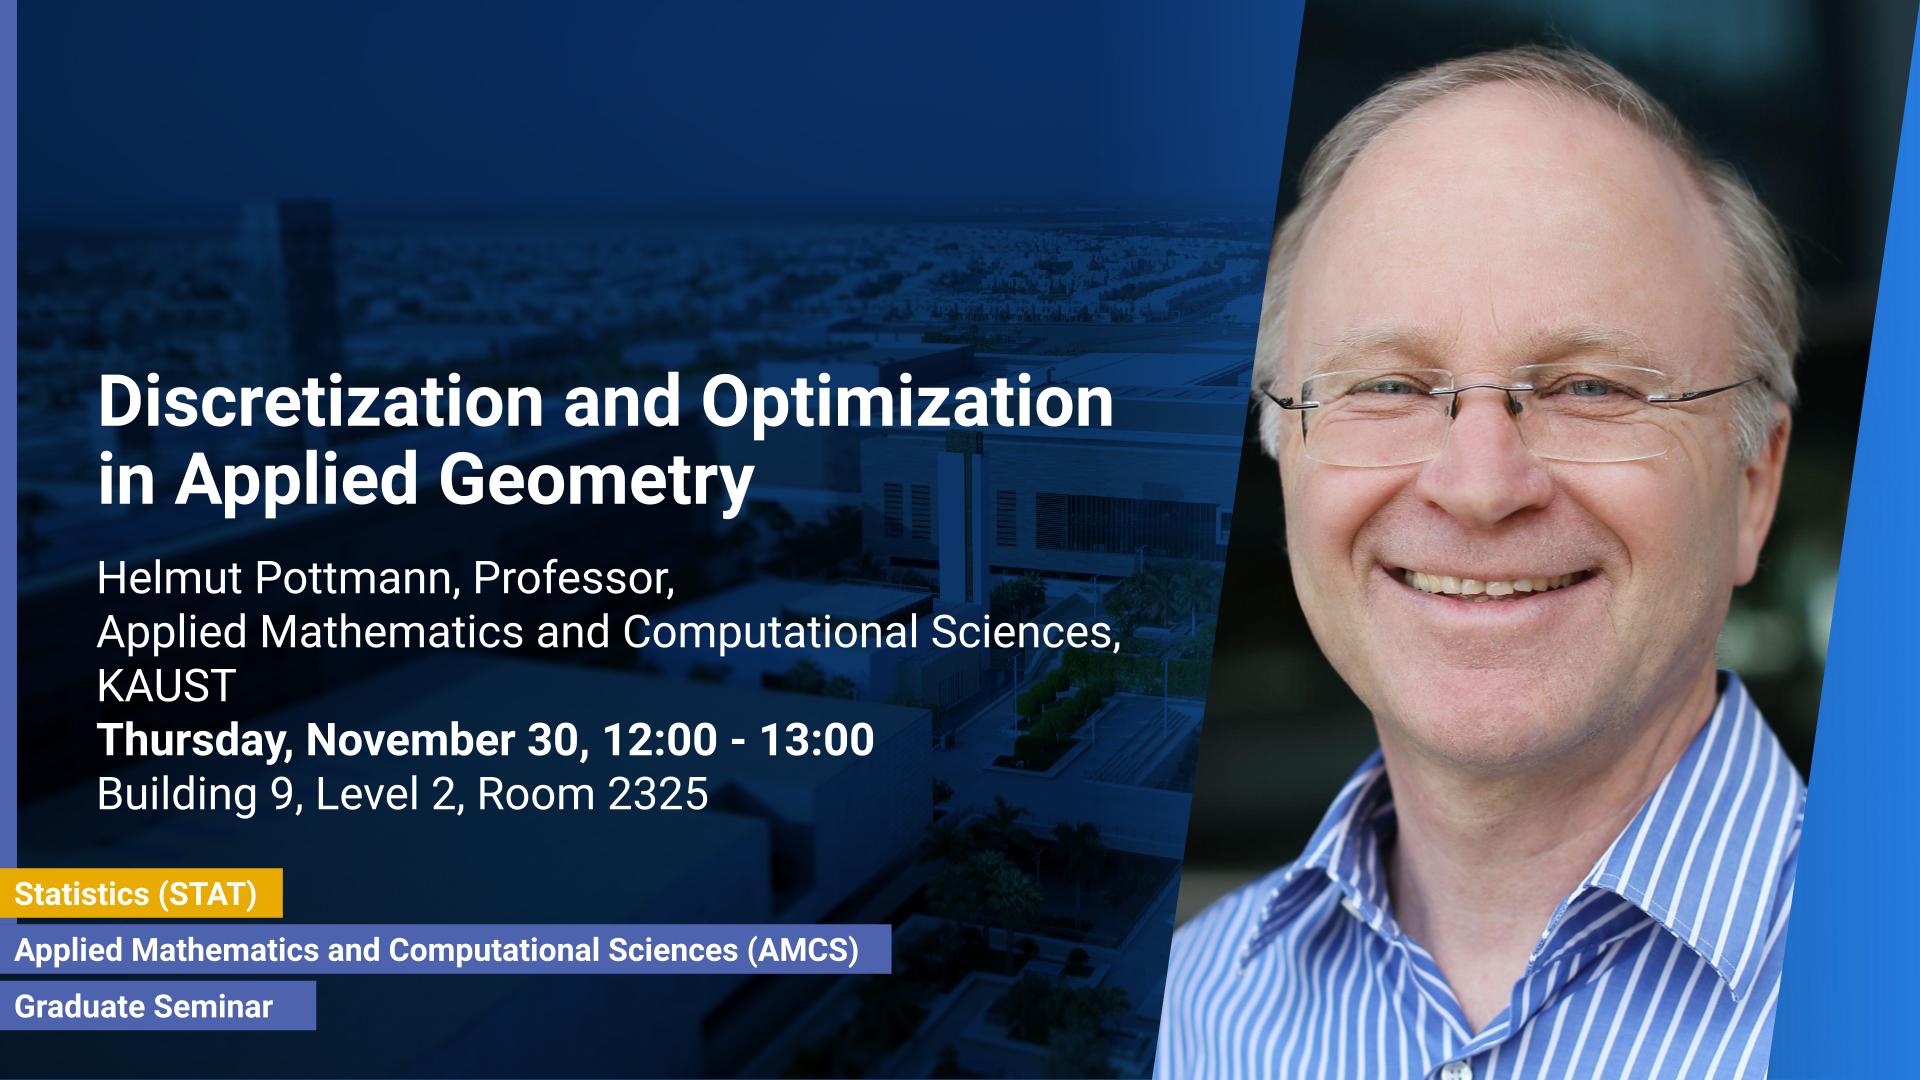 KAUST-CEMSE-AMCS-STAT-Gradaute-Seminar-Helmut-Pottmann-Discretization-and-Optimization-in Applied-Geometry